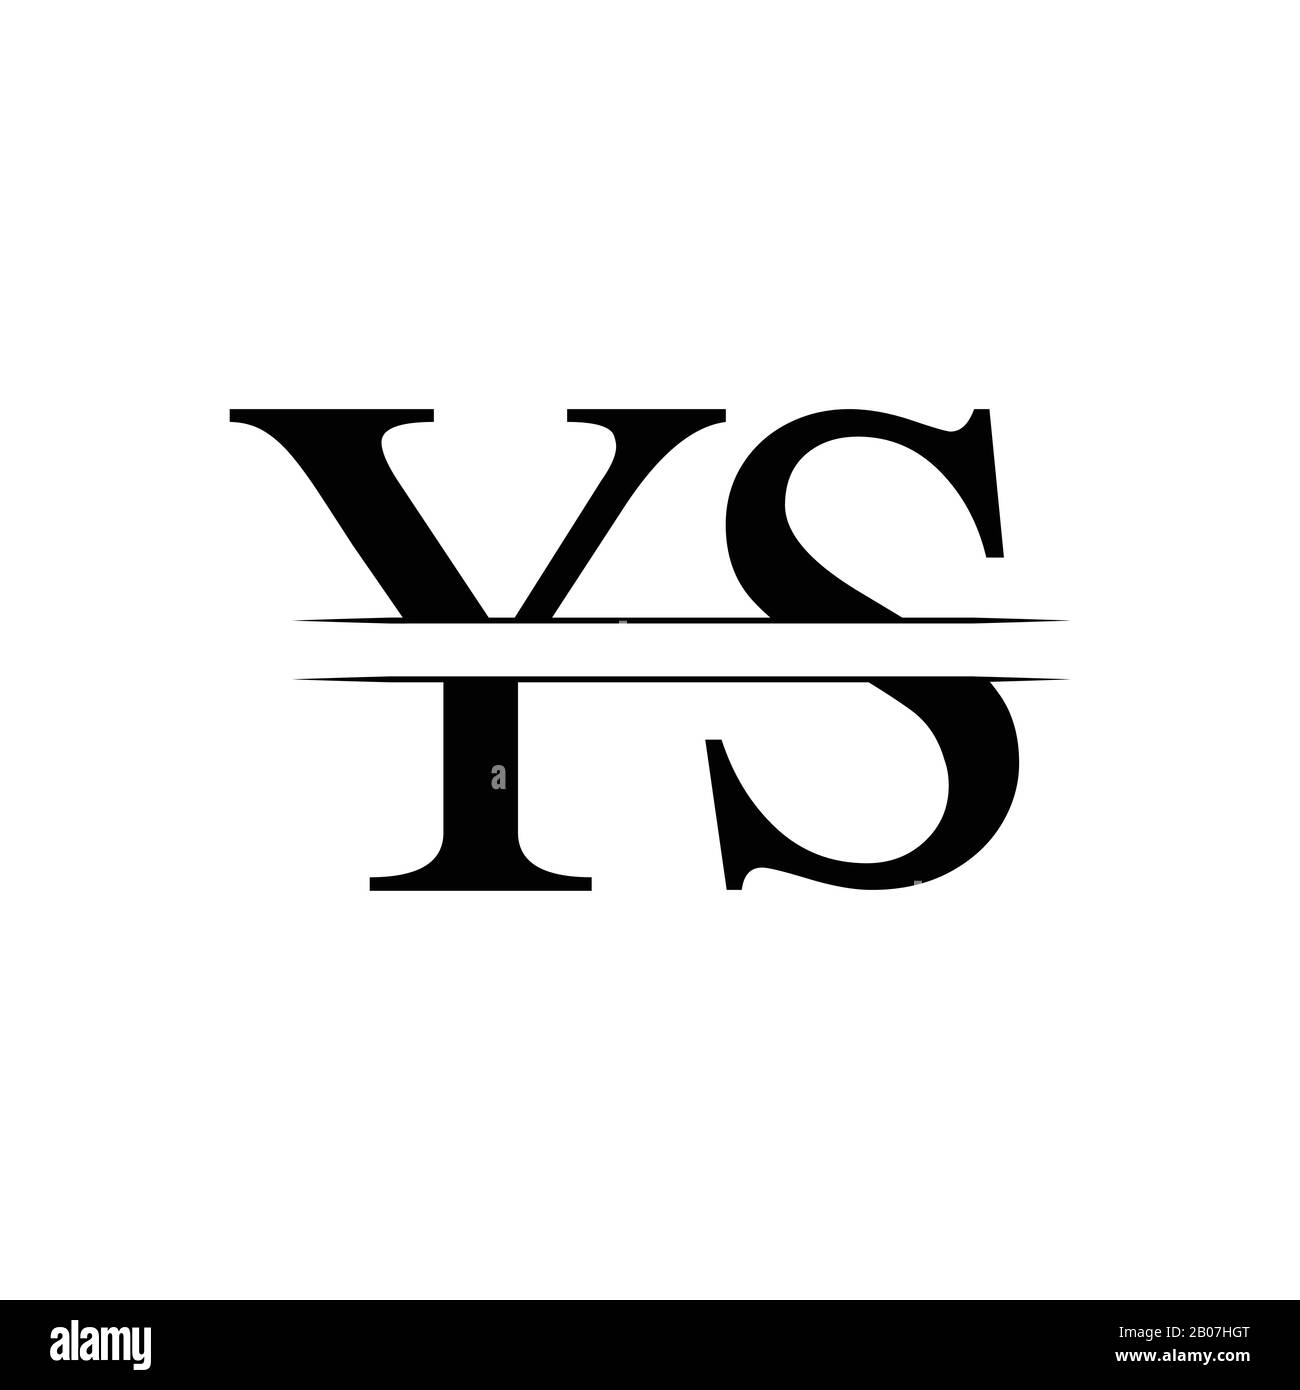 Ys logo Black and White Stock Photos & Images - Alamy